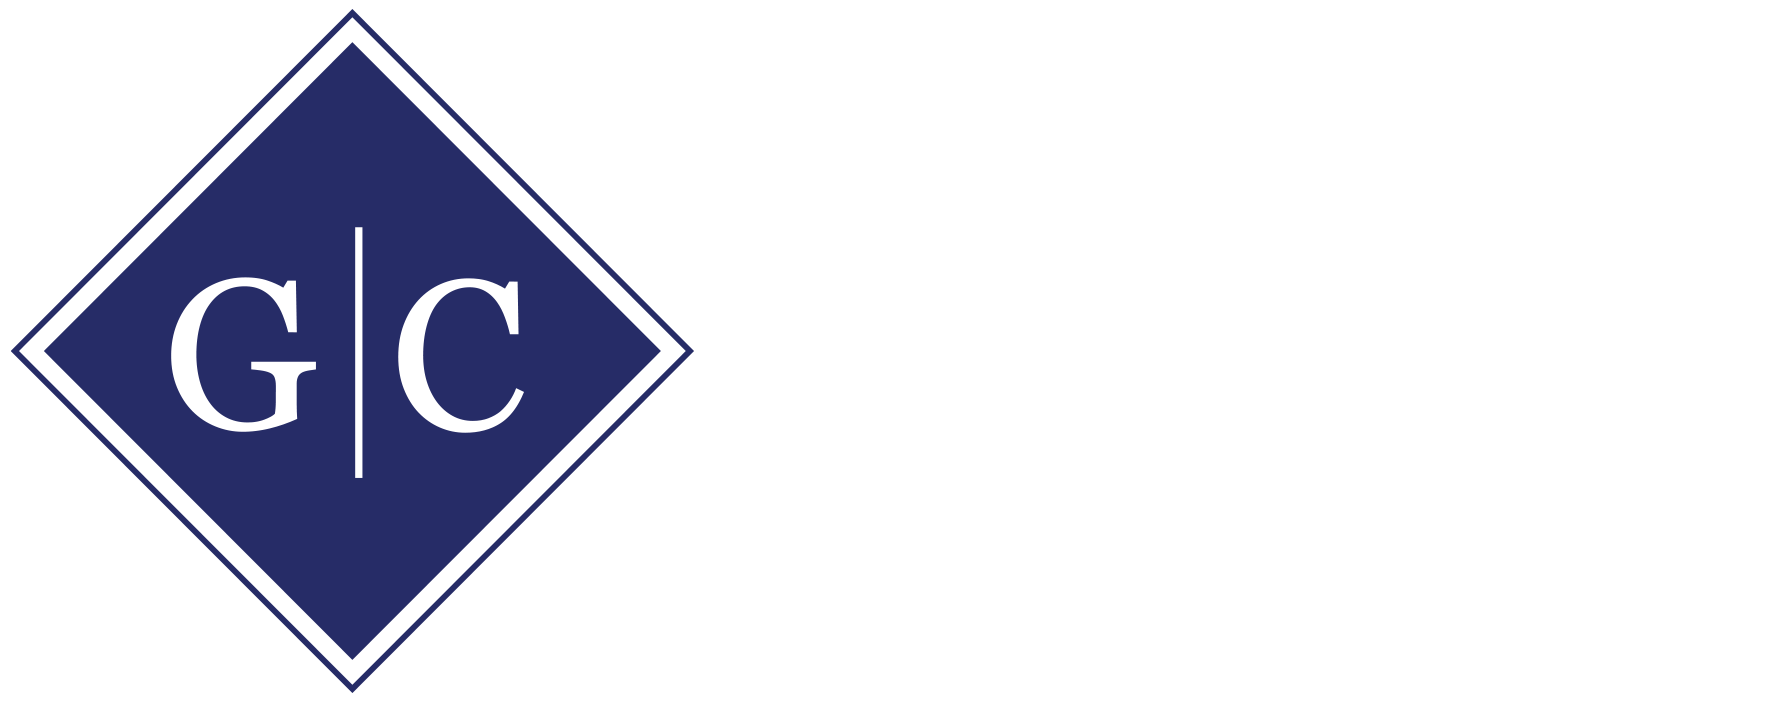 Grant Cottrell, PLLC